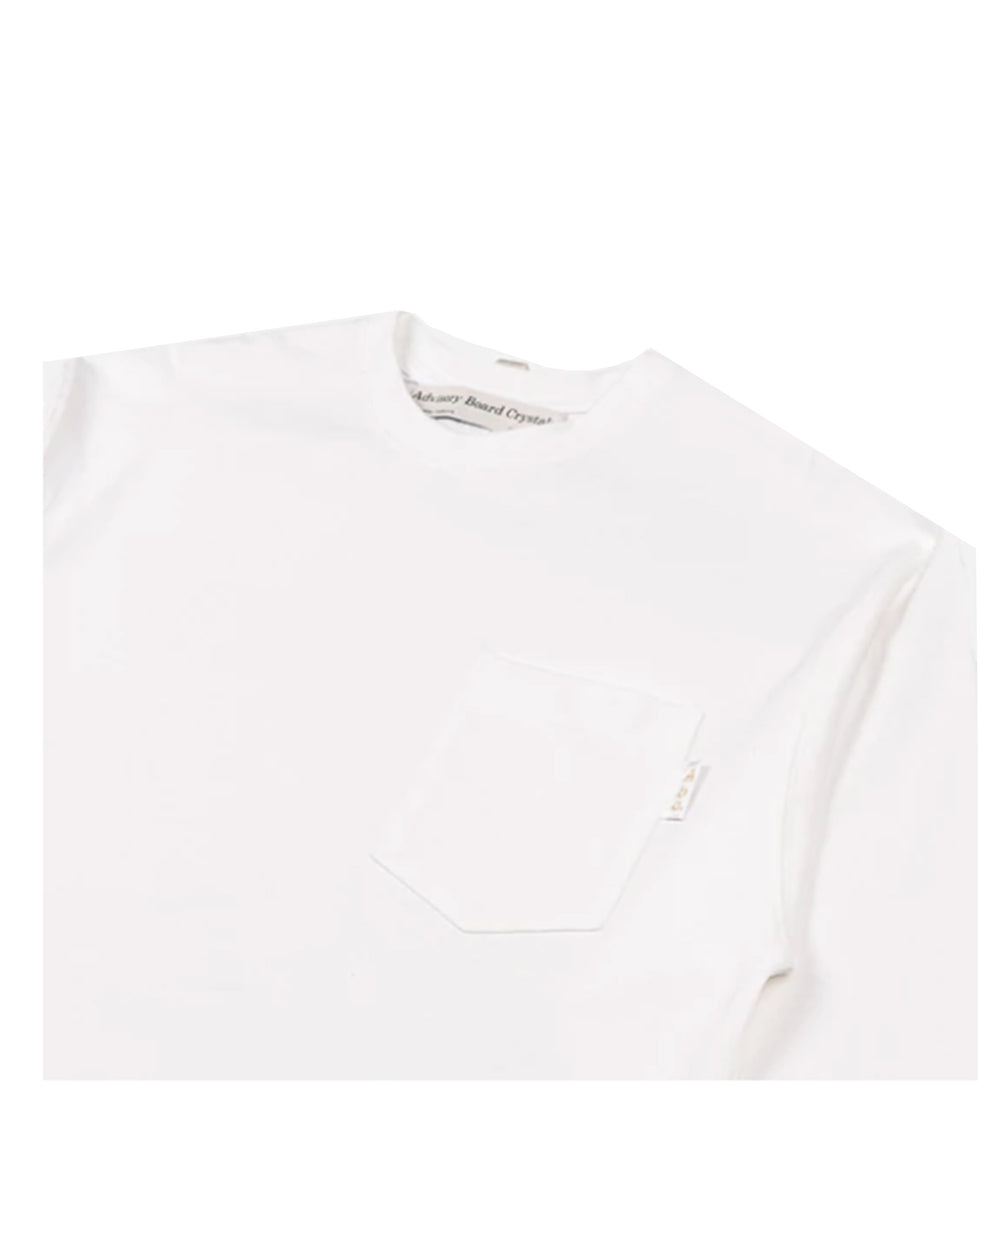 ADVISORY BOARD CRYSTALS No Imitations T-Shirt White